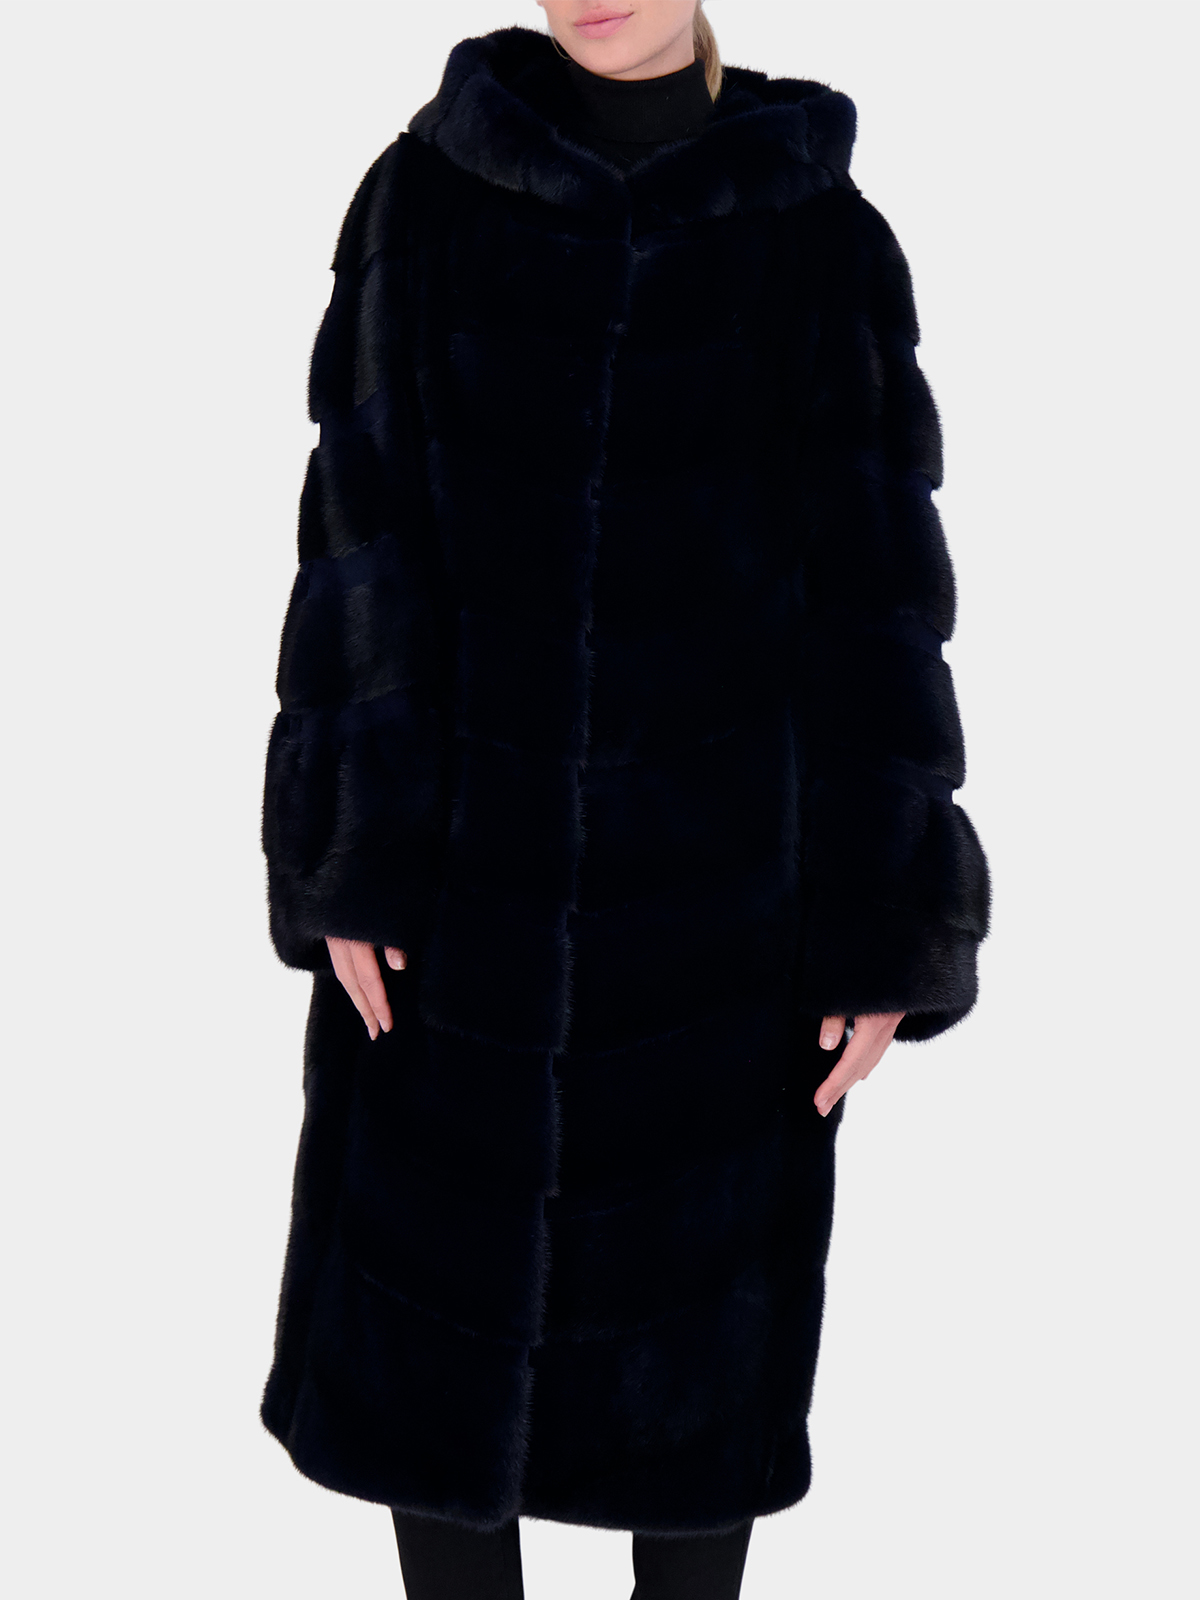 Woman's Dark Blue Hooded Mink Fur Short Coat with Sheared Mink Inserts